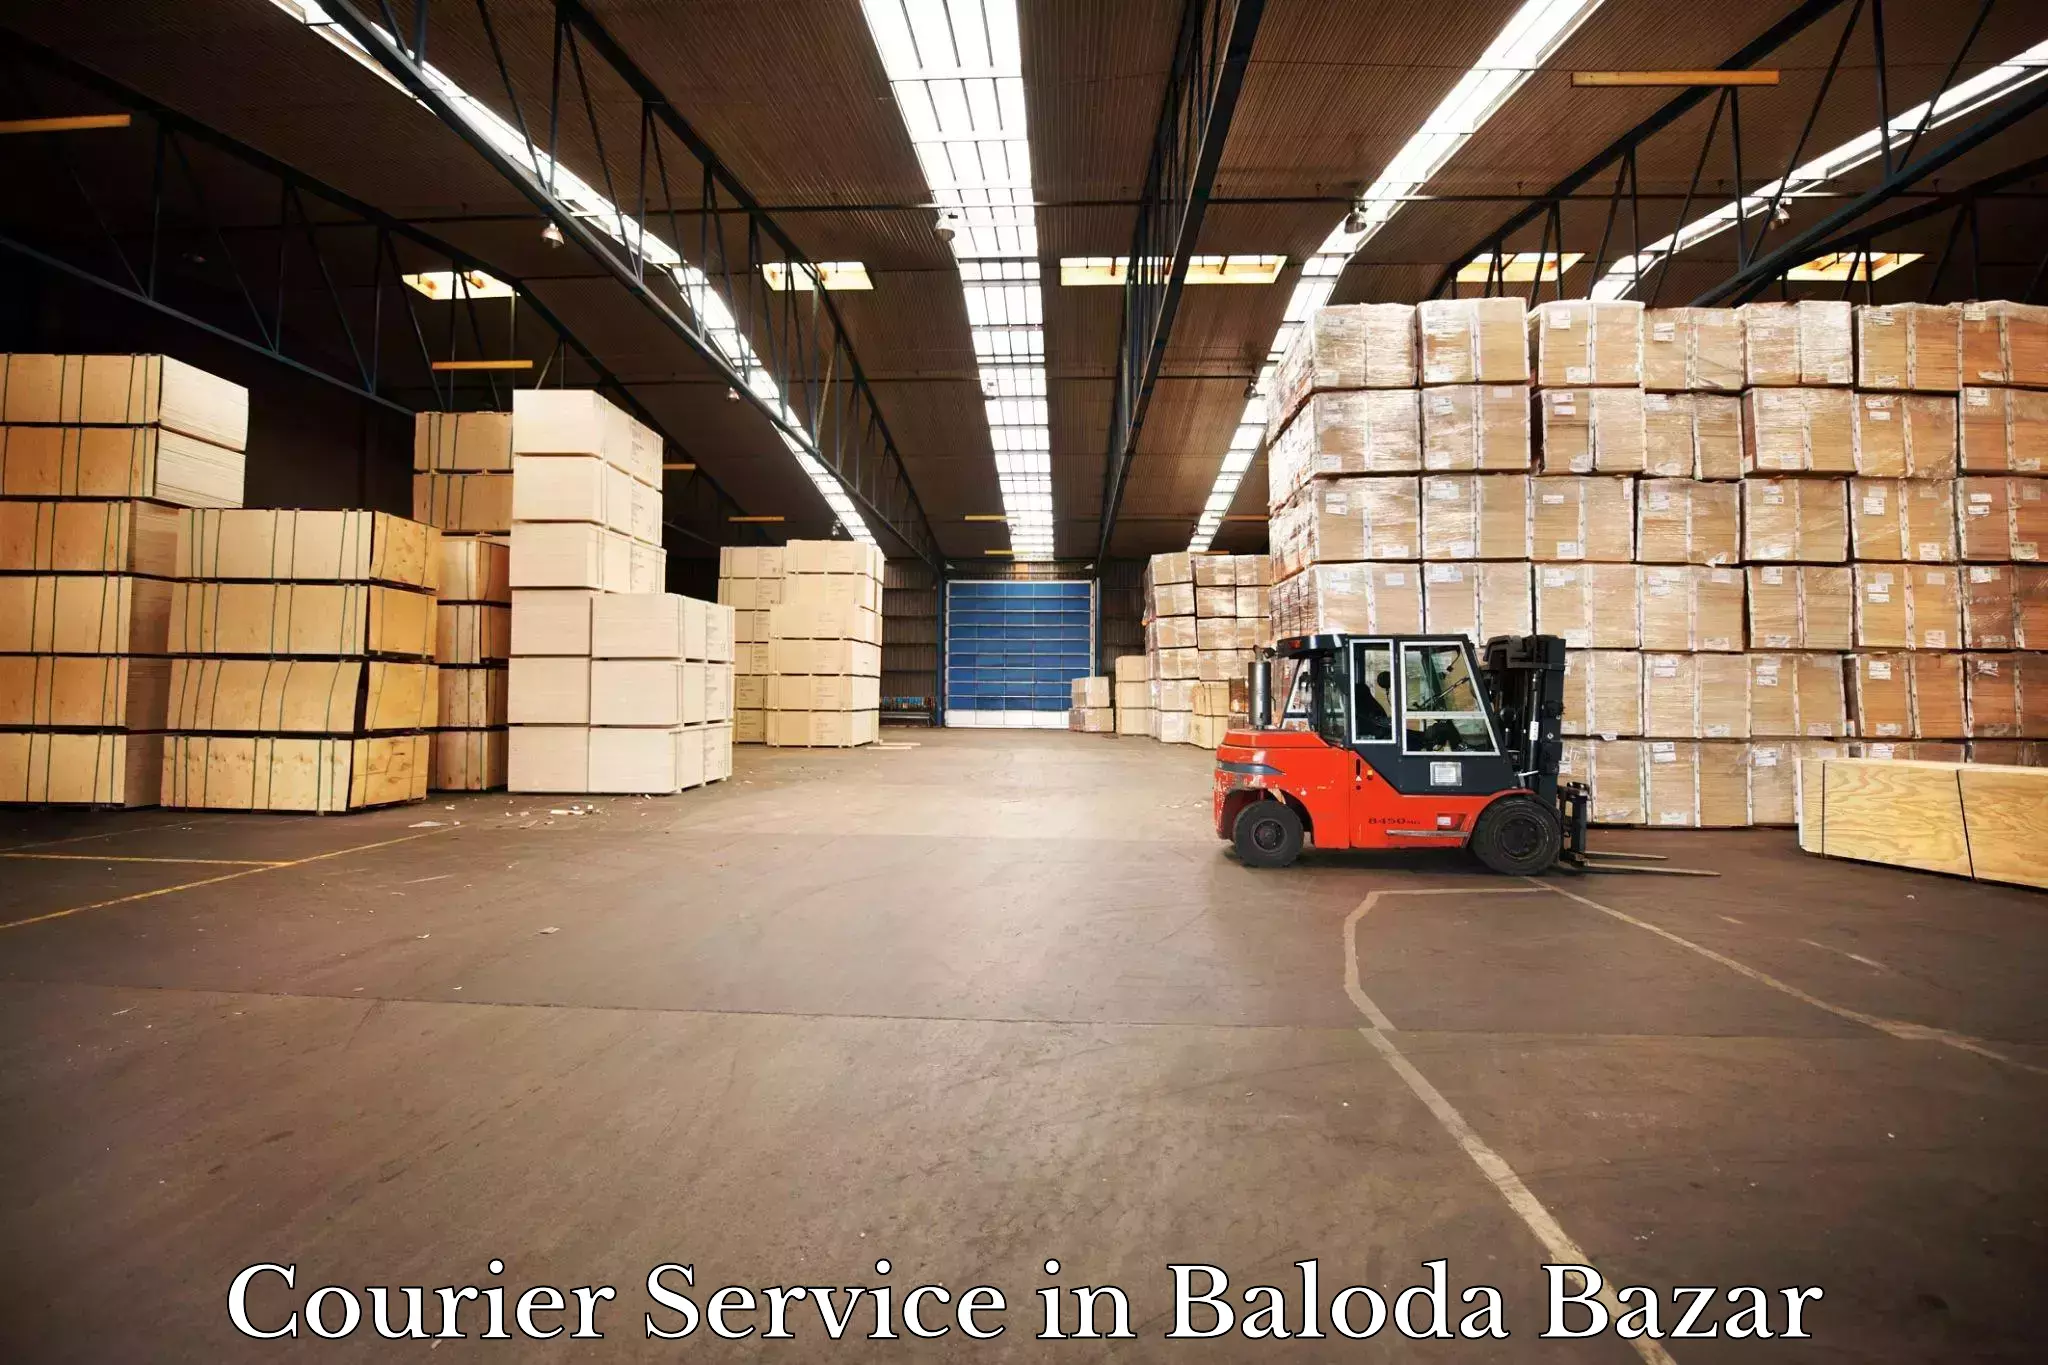 Delivery service partnership in Baloda Bazar